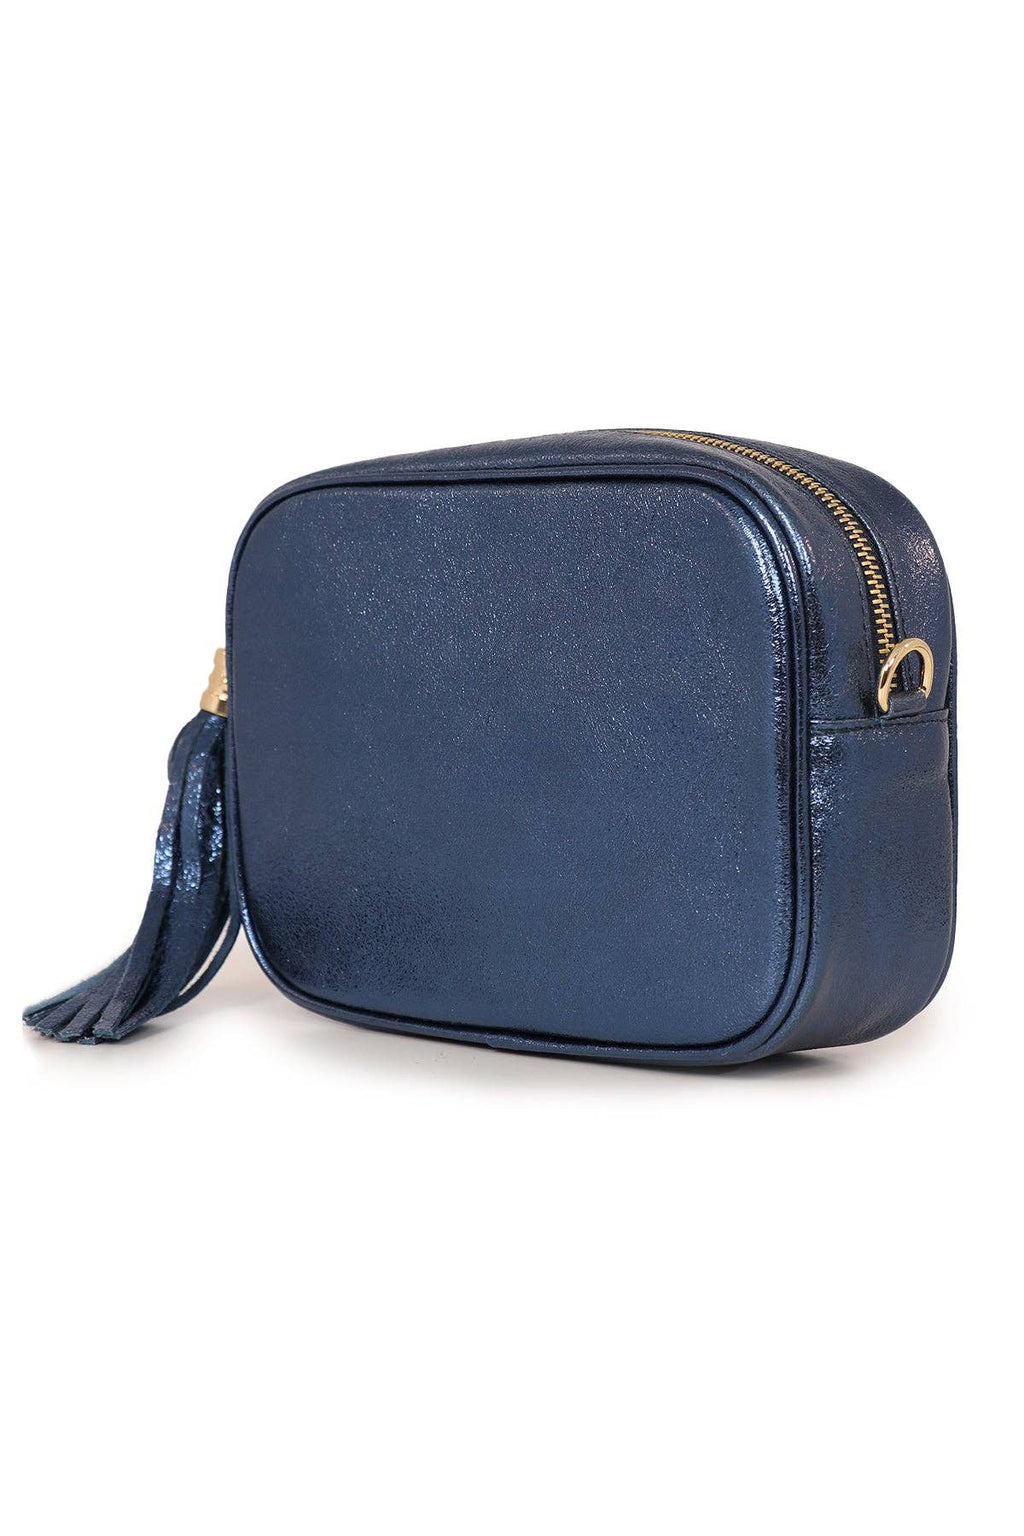 Metallic Midnight Blue Italian Leather Camera Bag